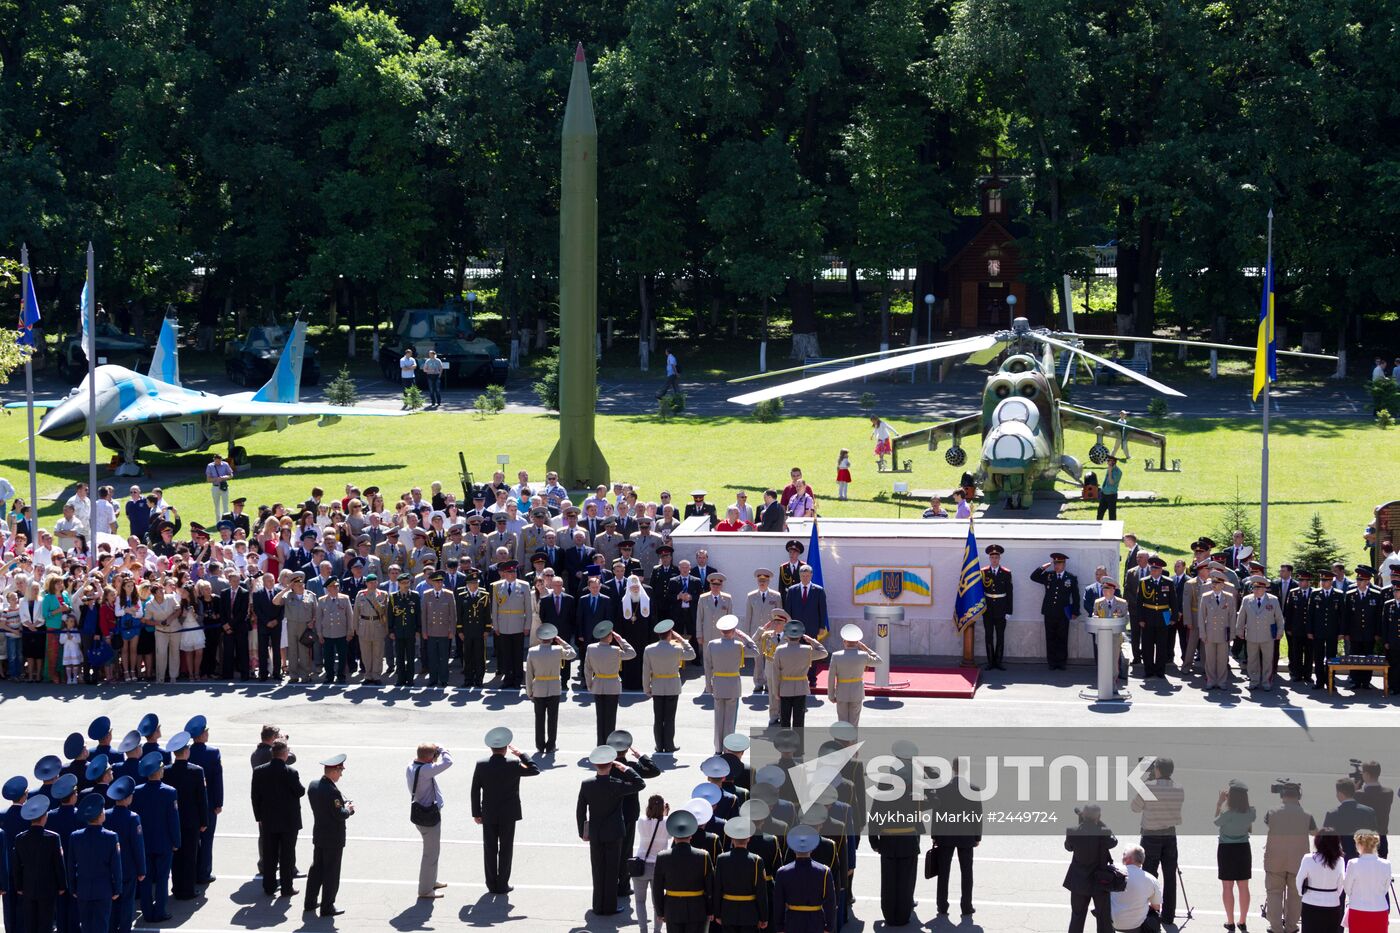 Petro Poroshenko attends graduation ceremony at National University of Defense of Ukraine